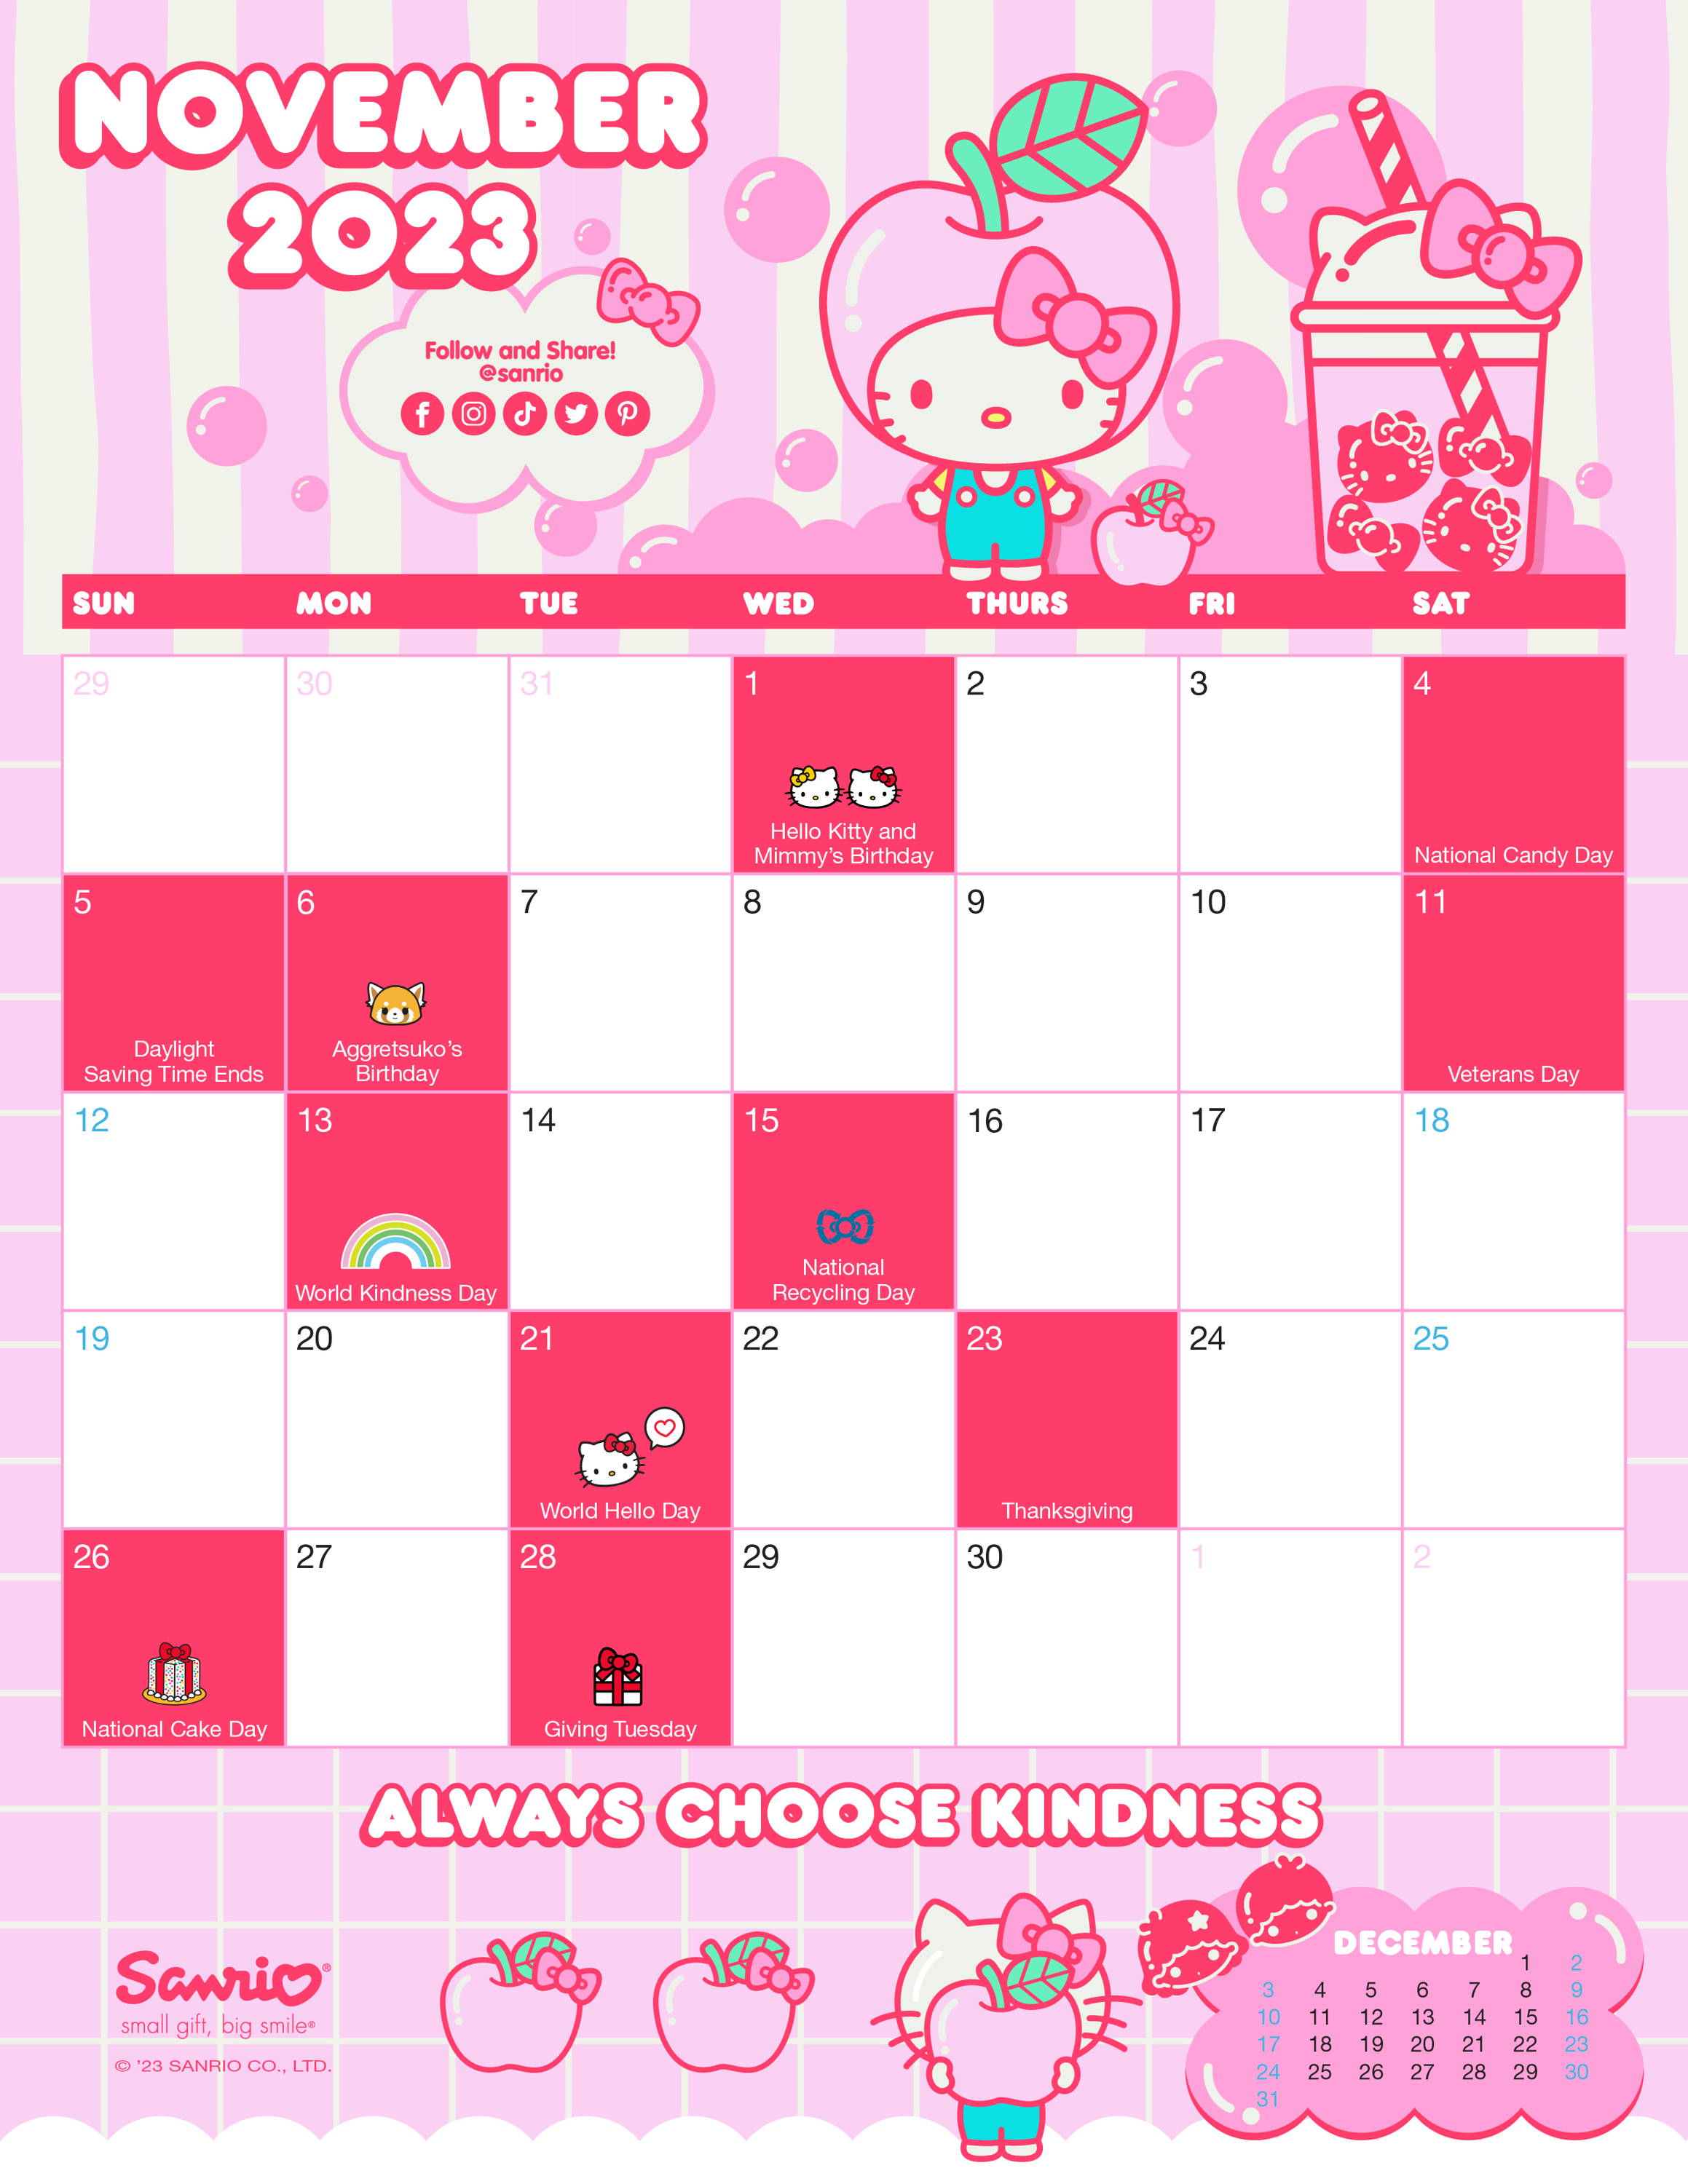 Sanrio Friend of the Month November 2023  Calendar featuring Hello Kitty.